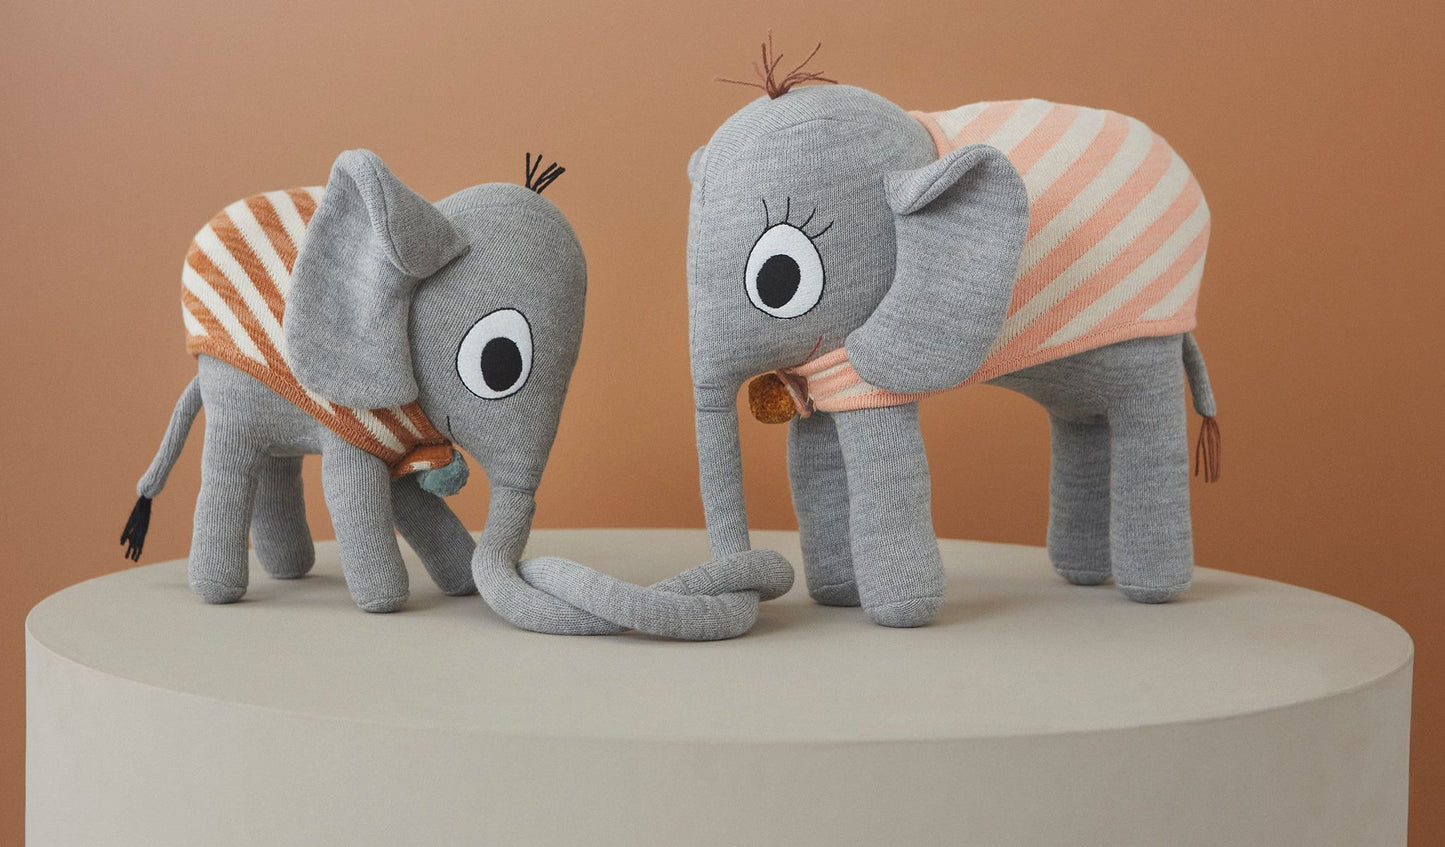 Ramboline Elefant - Grau